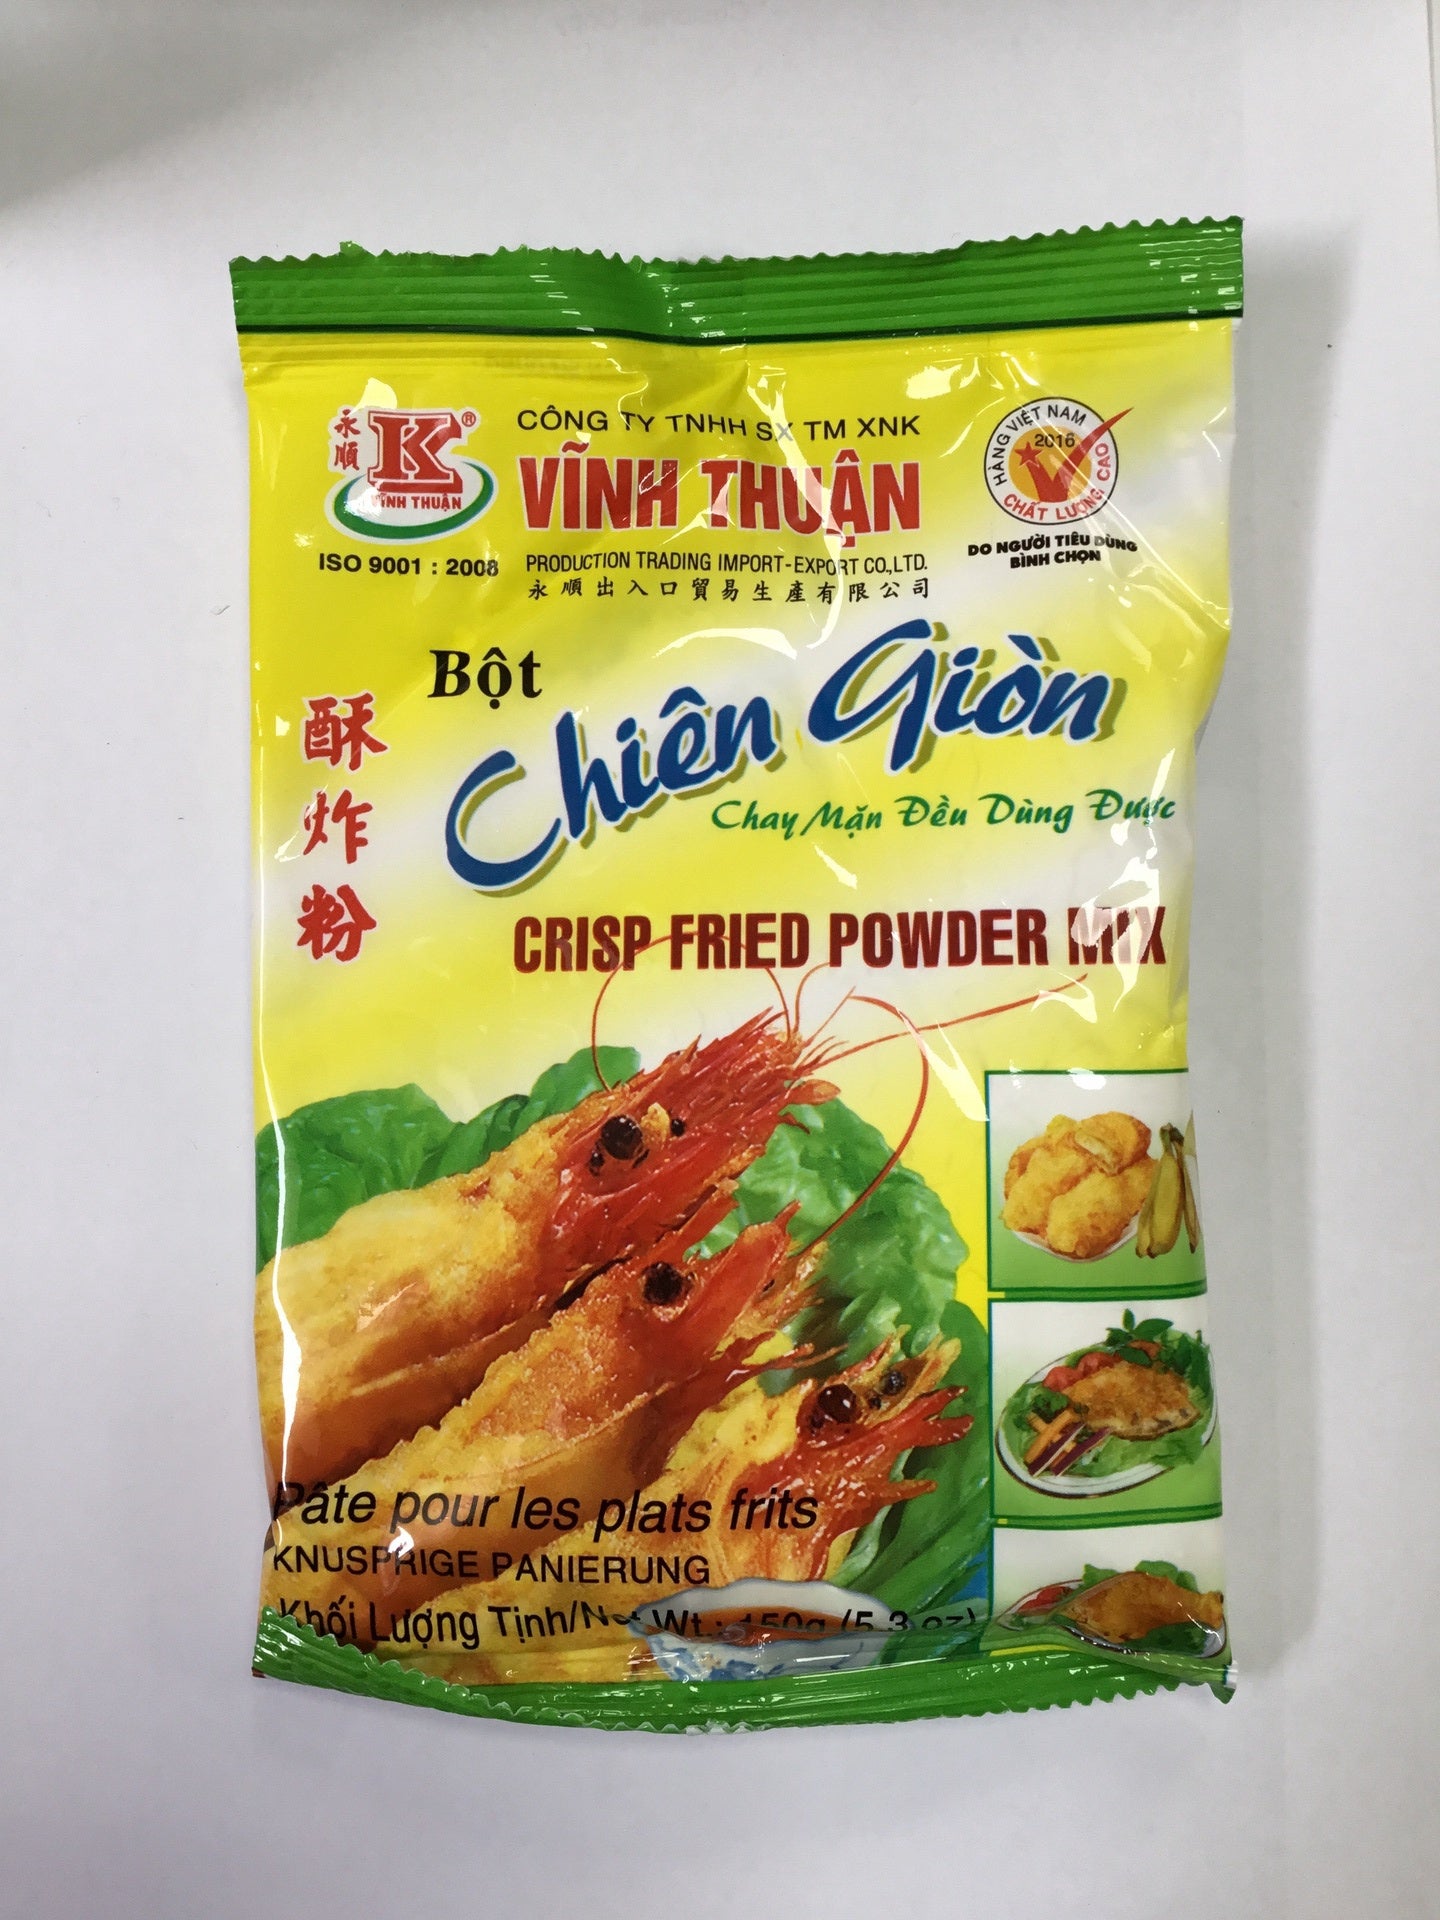 Vinh Thuan Crisp Fried Powder Mix Bot Chien Gion  150gr x 1